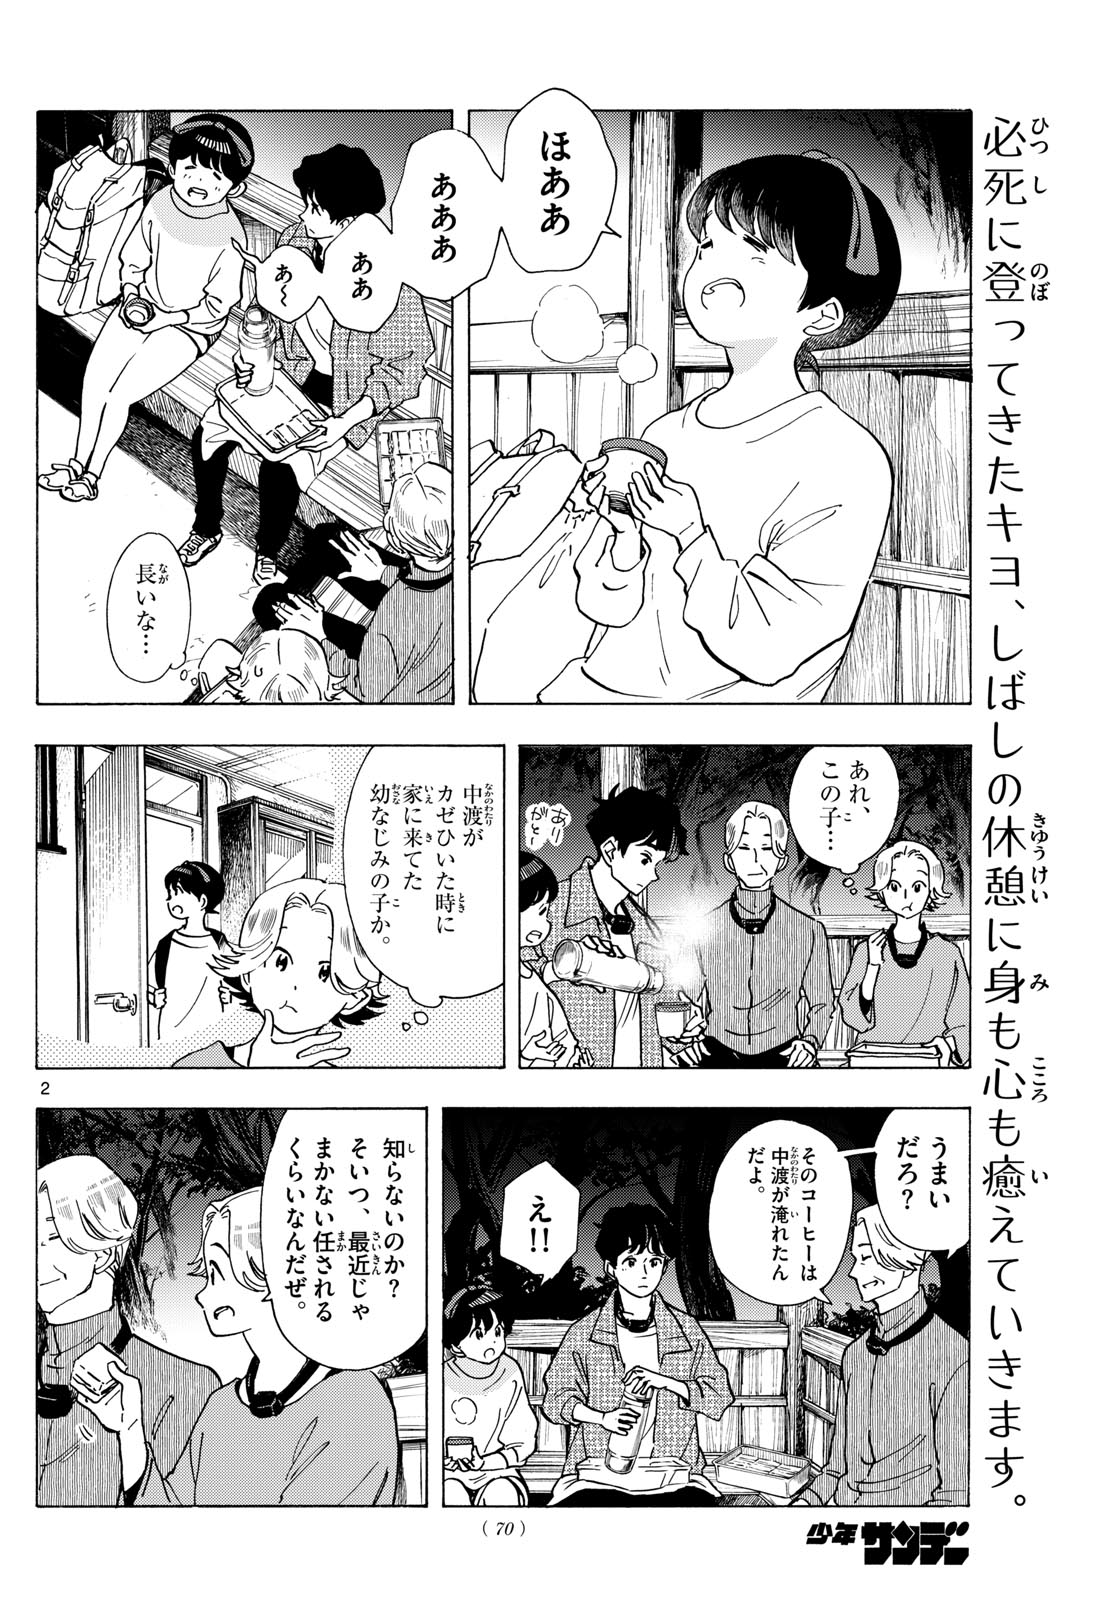 Maiko-san Chi no Makanai-san - Chapter 296 - Page 2